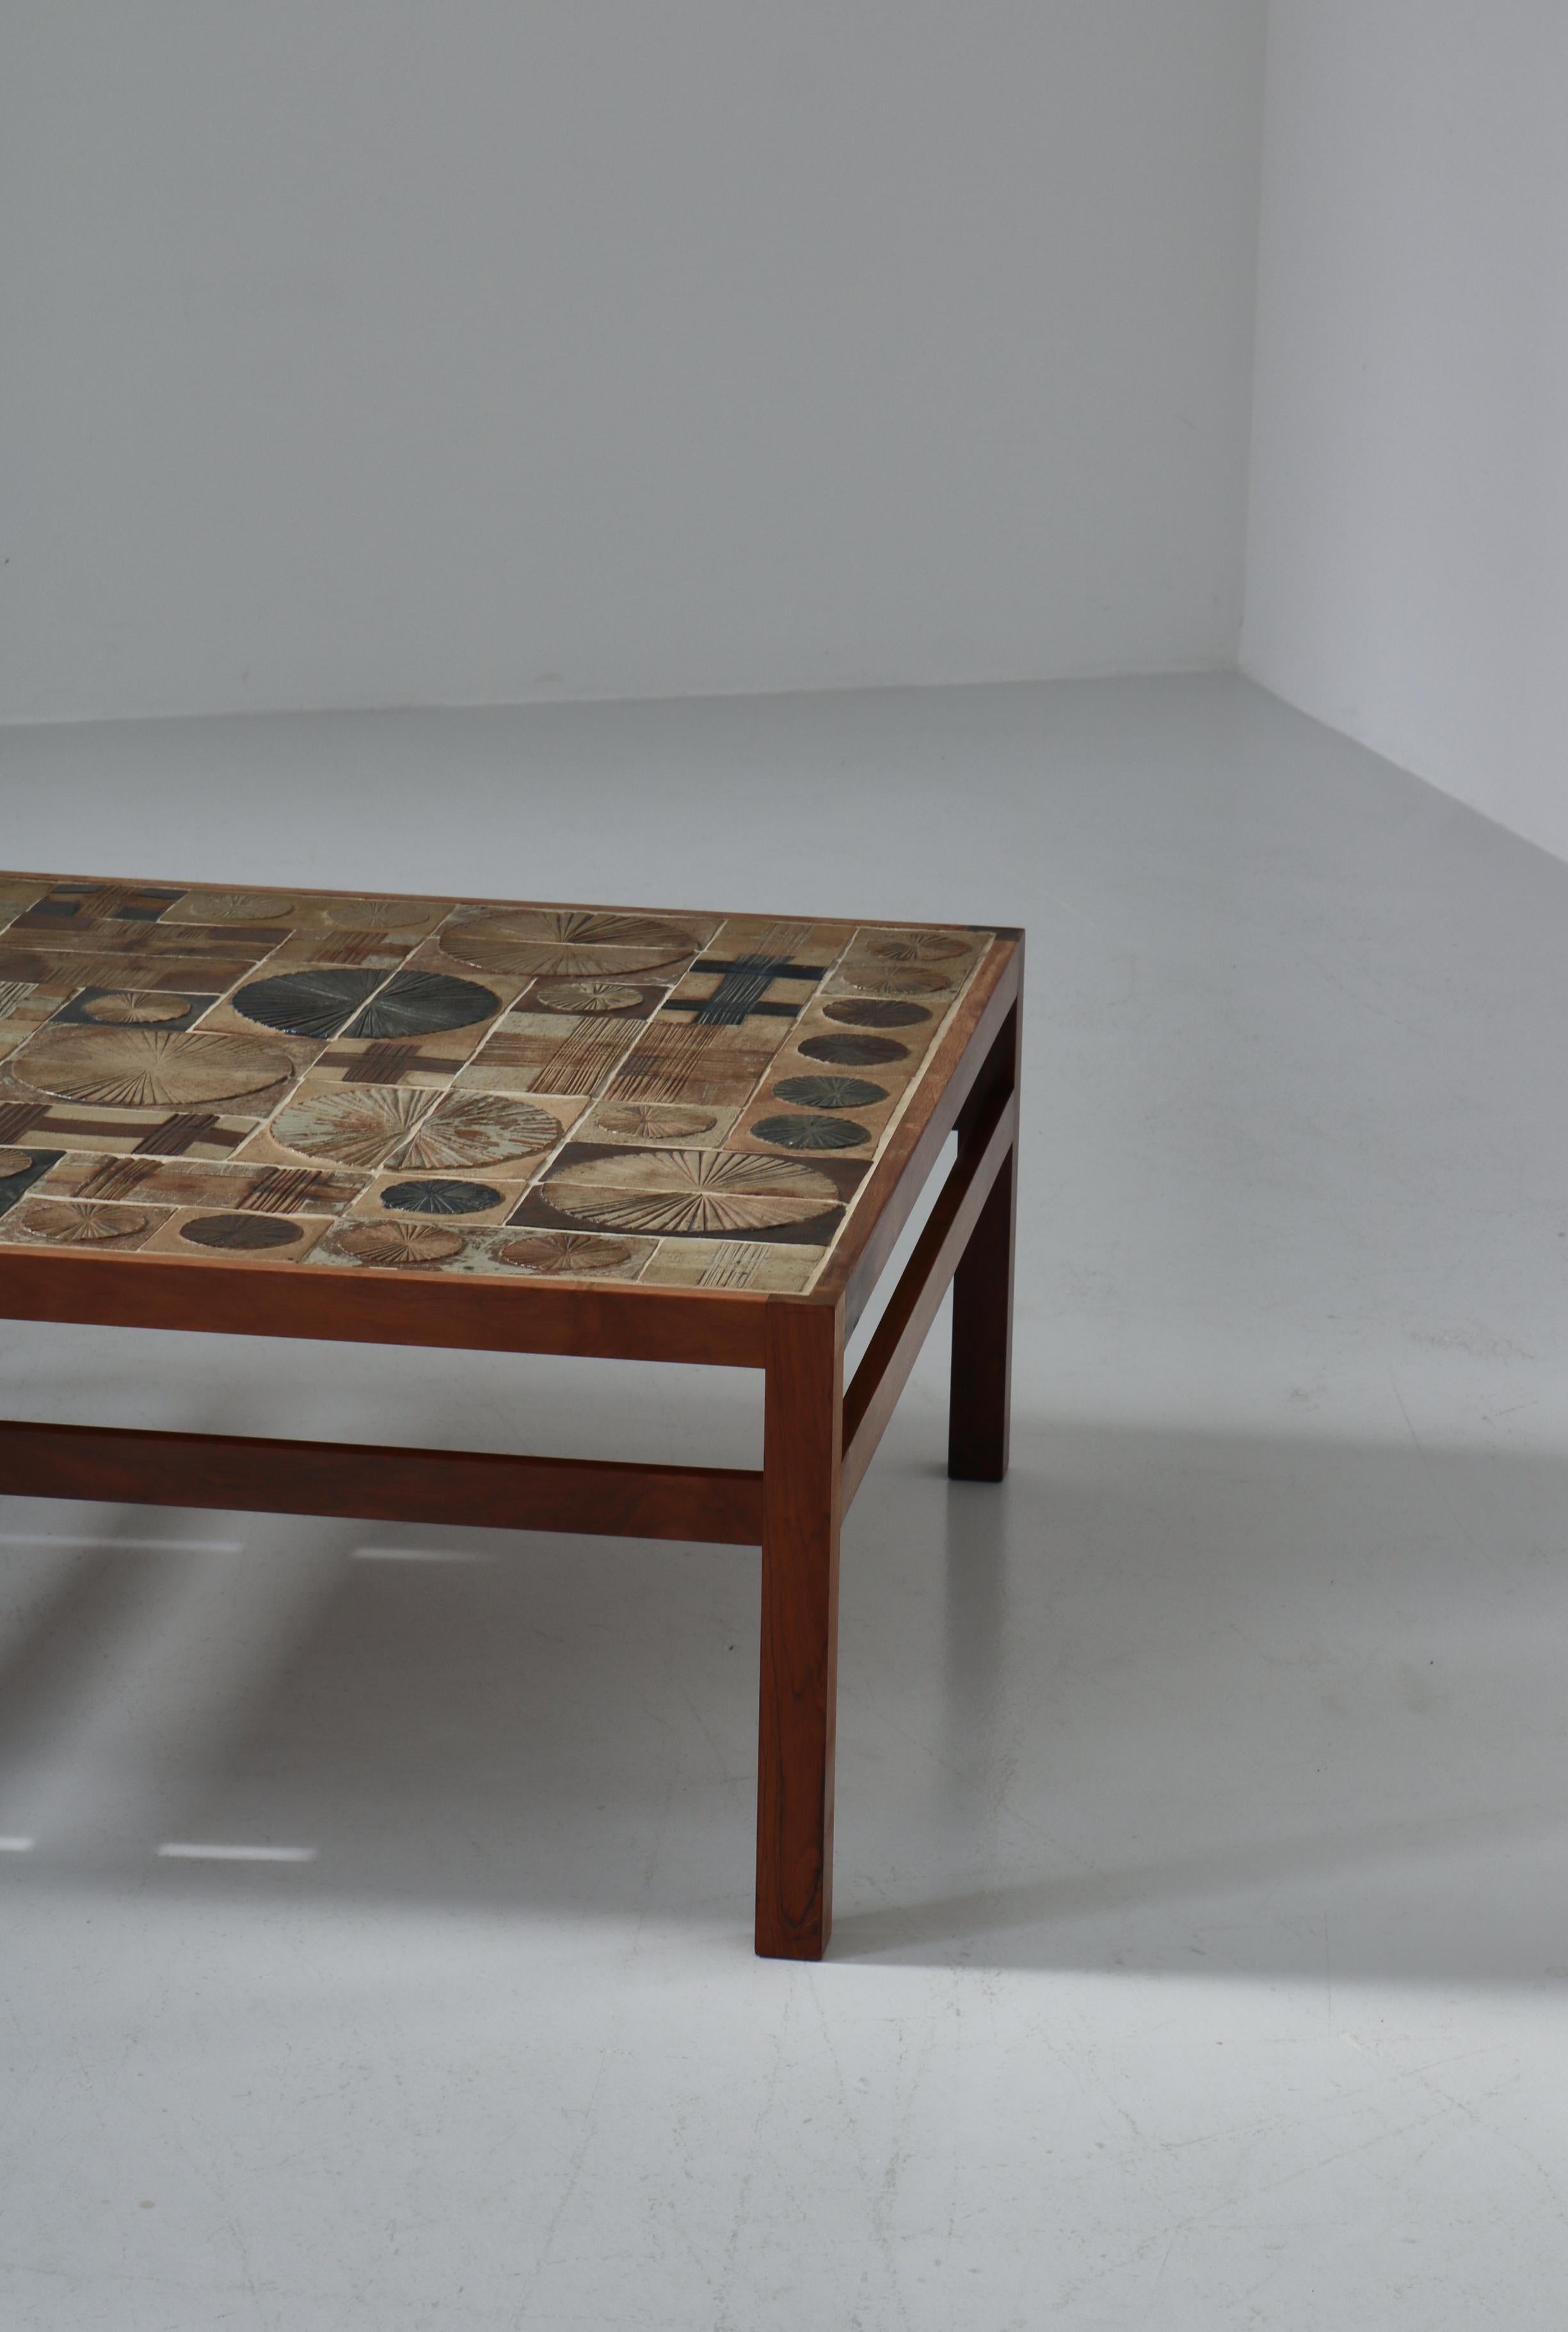 Tue Poulsen Coffee Table in Rosewood & Ceramic Tiles, Denmark, 1960s 1